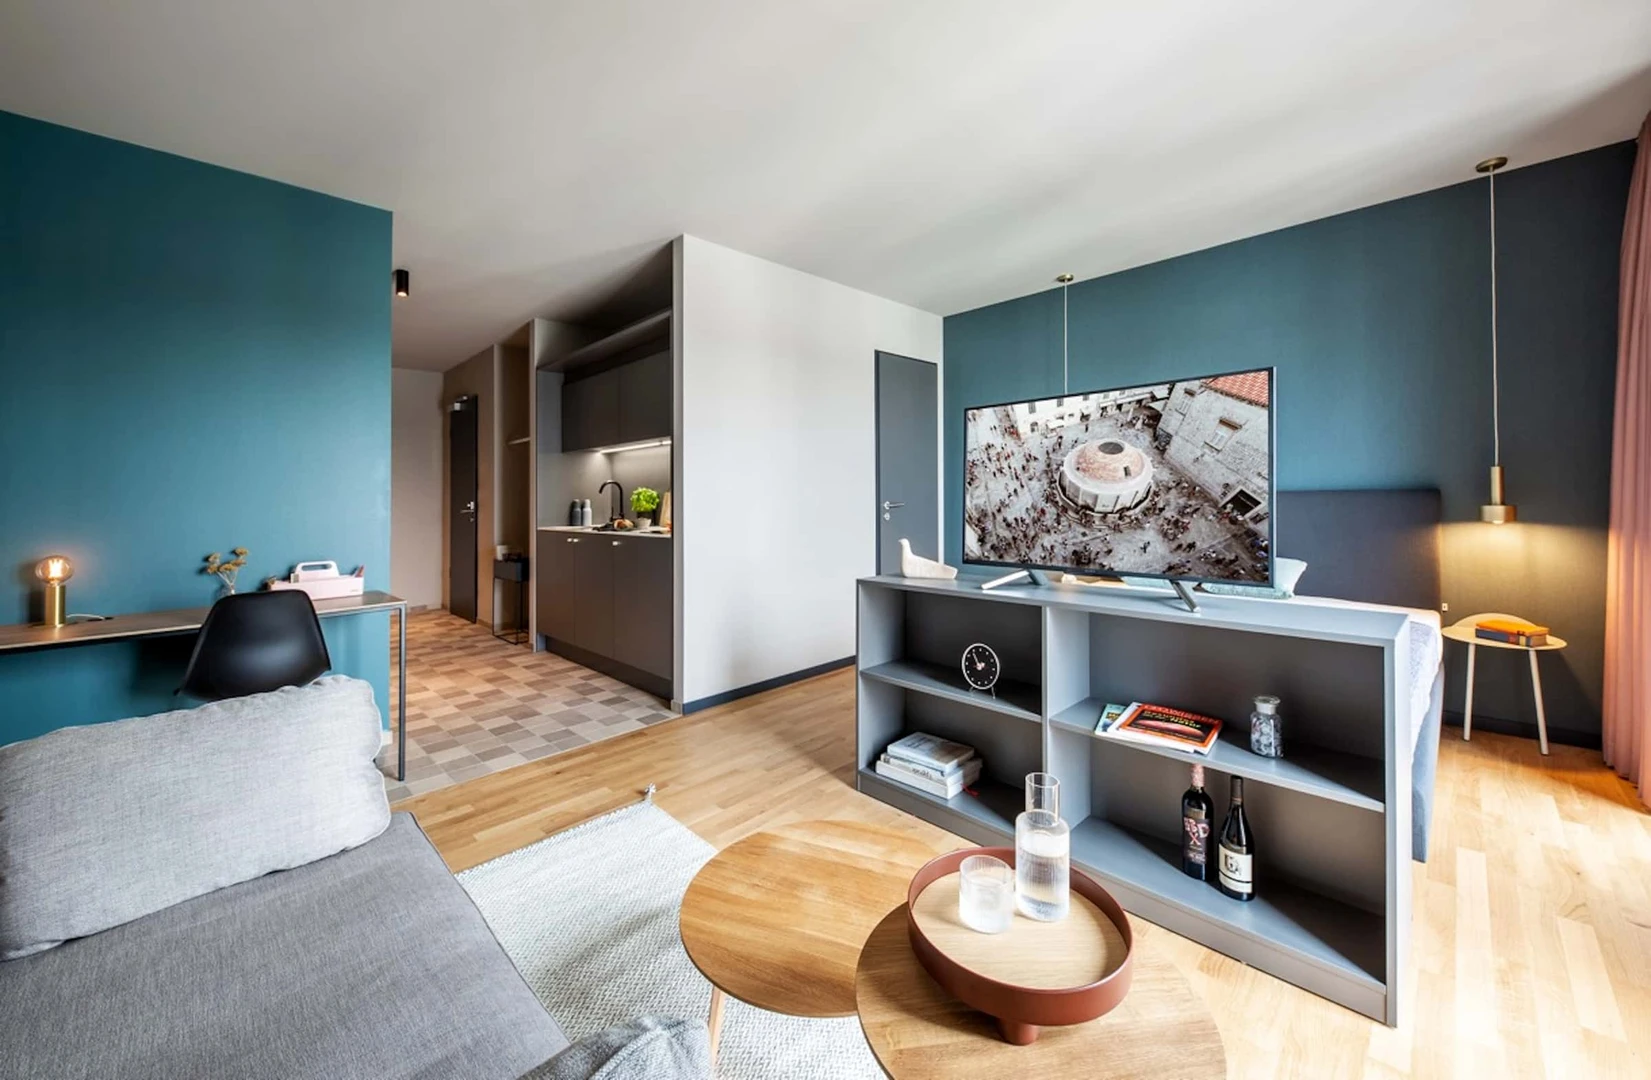 Entire fully furnished flat in Braunschweig